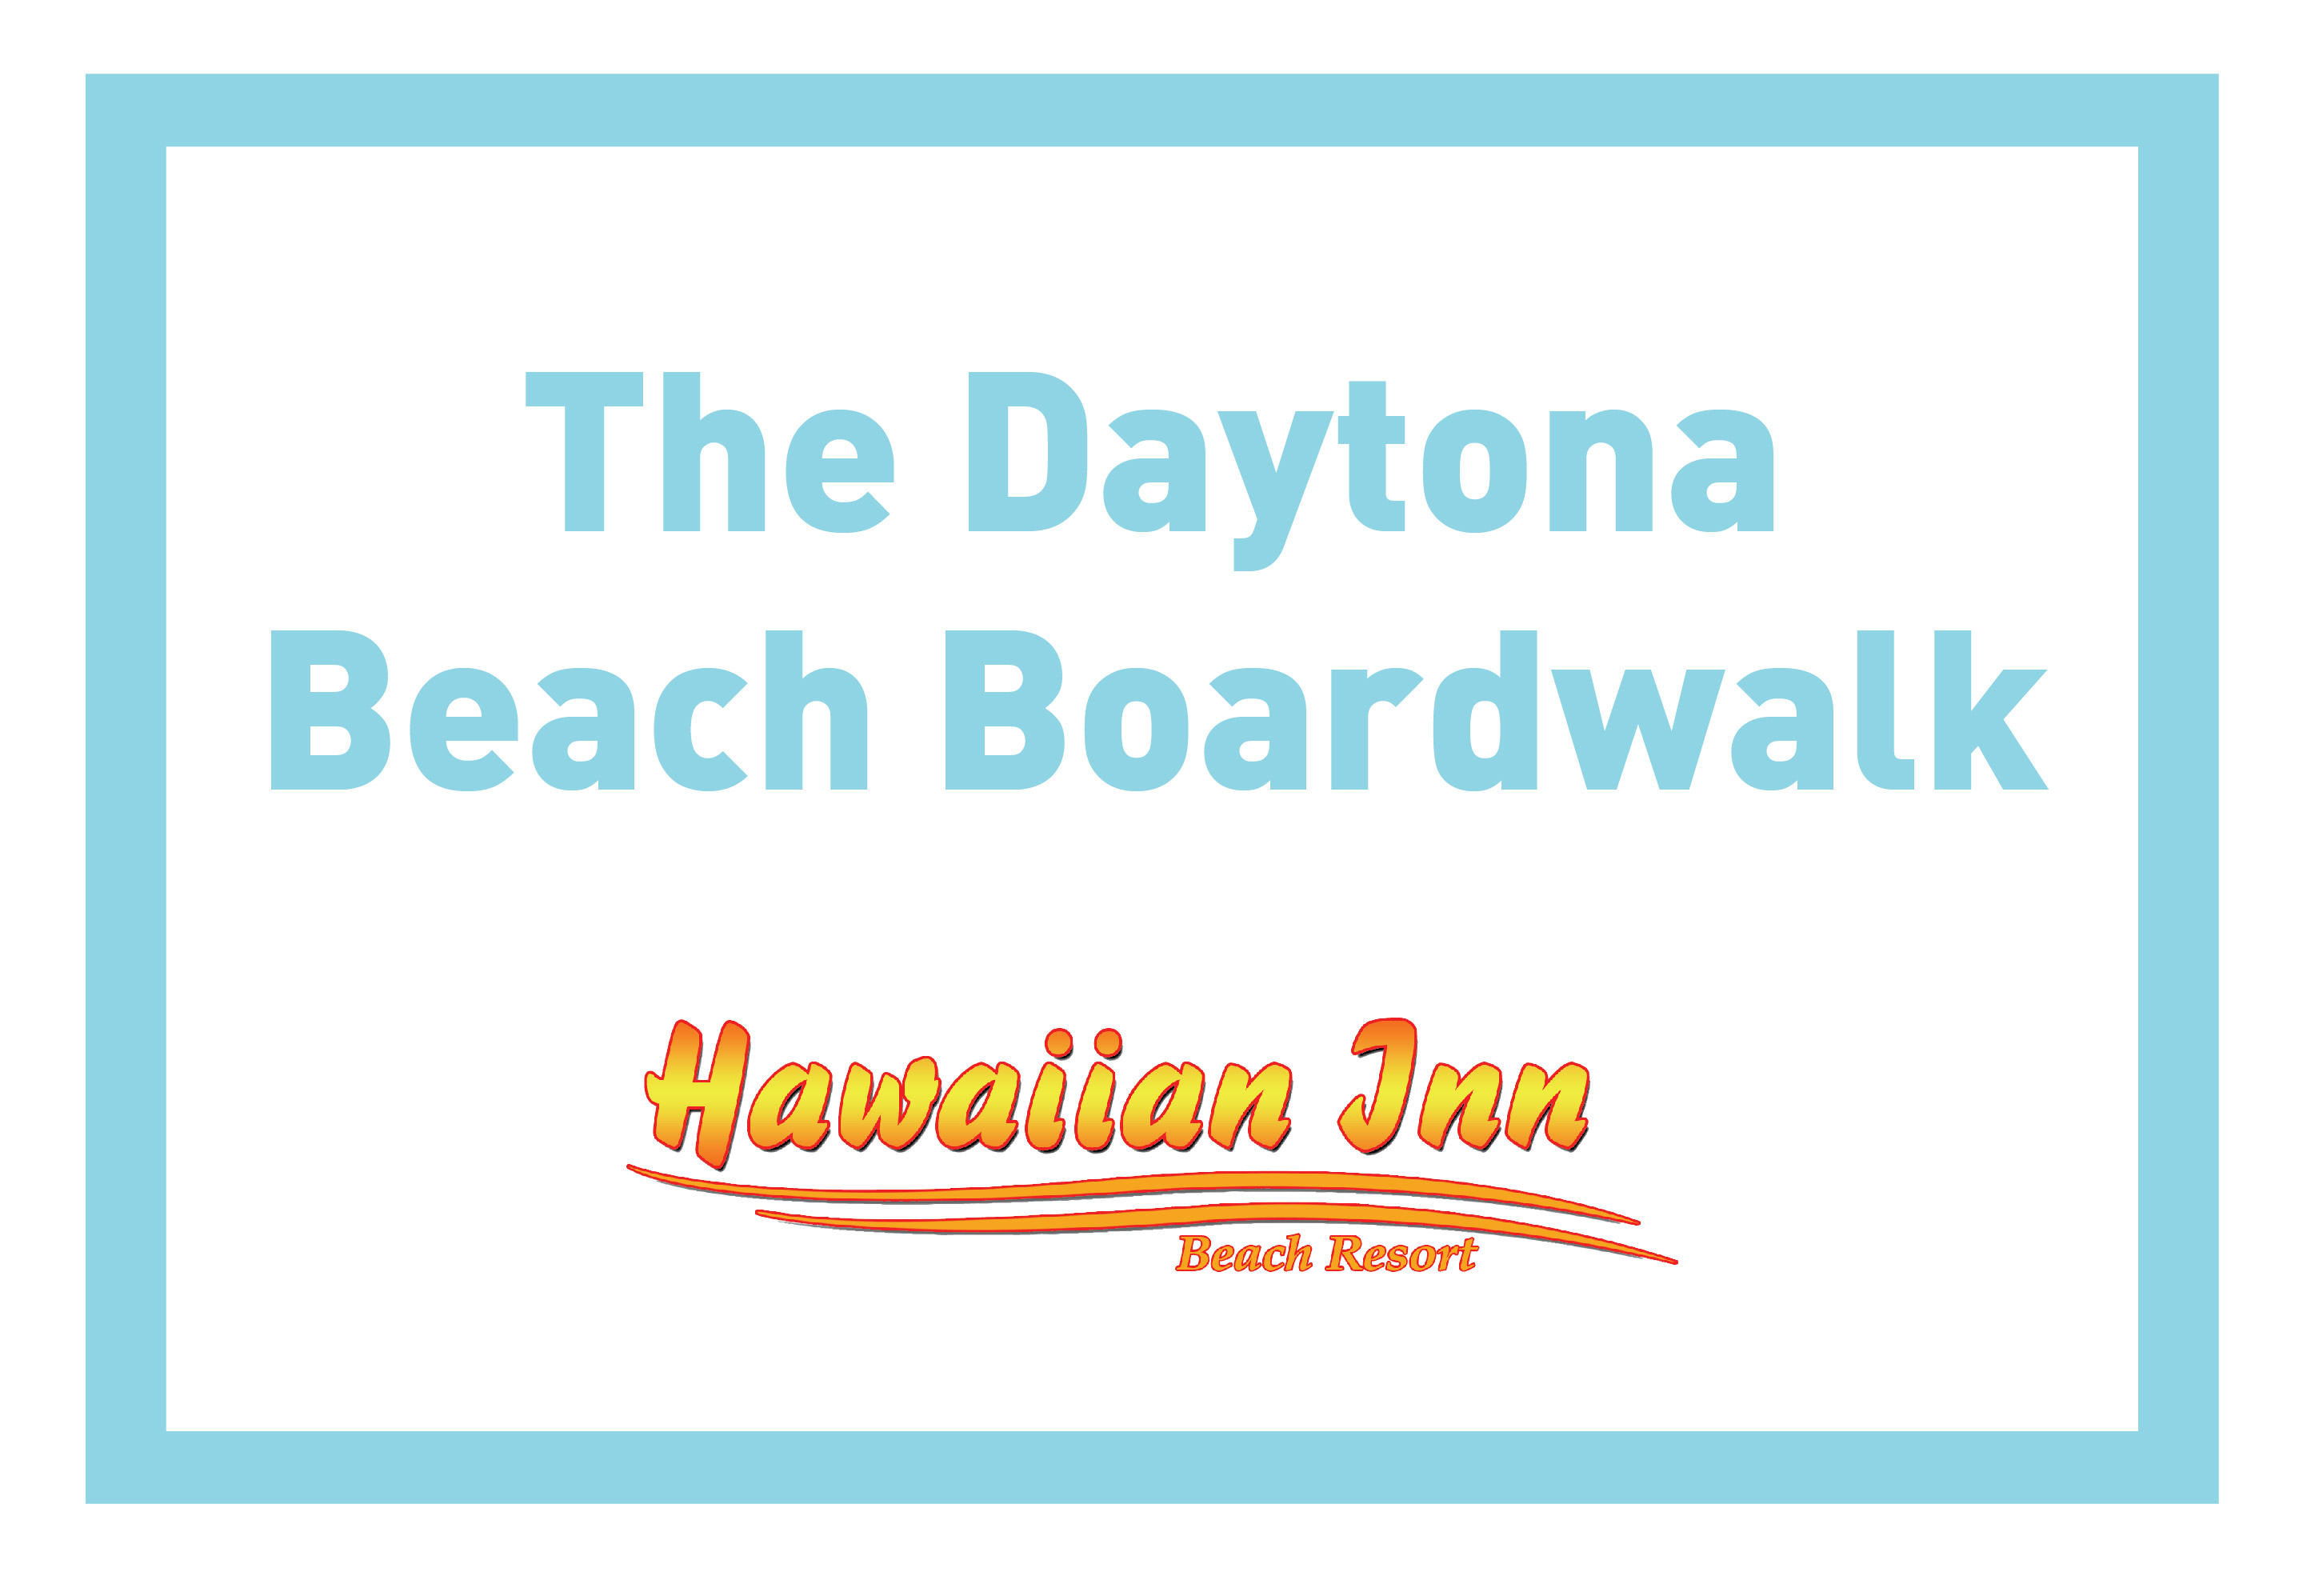 The Daytona Beach Boardwalk